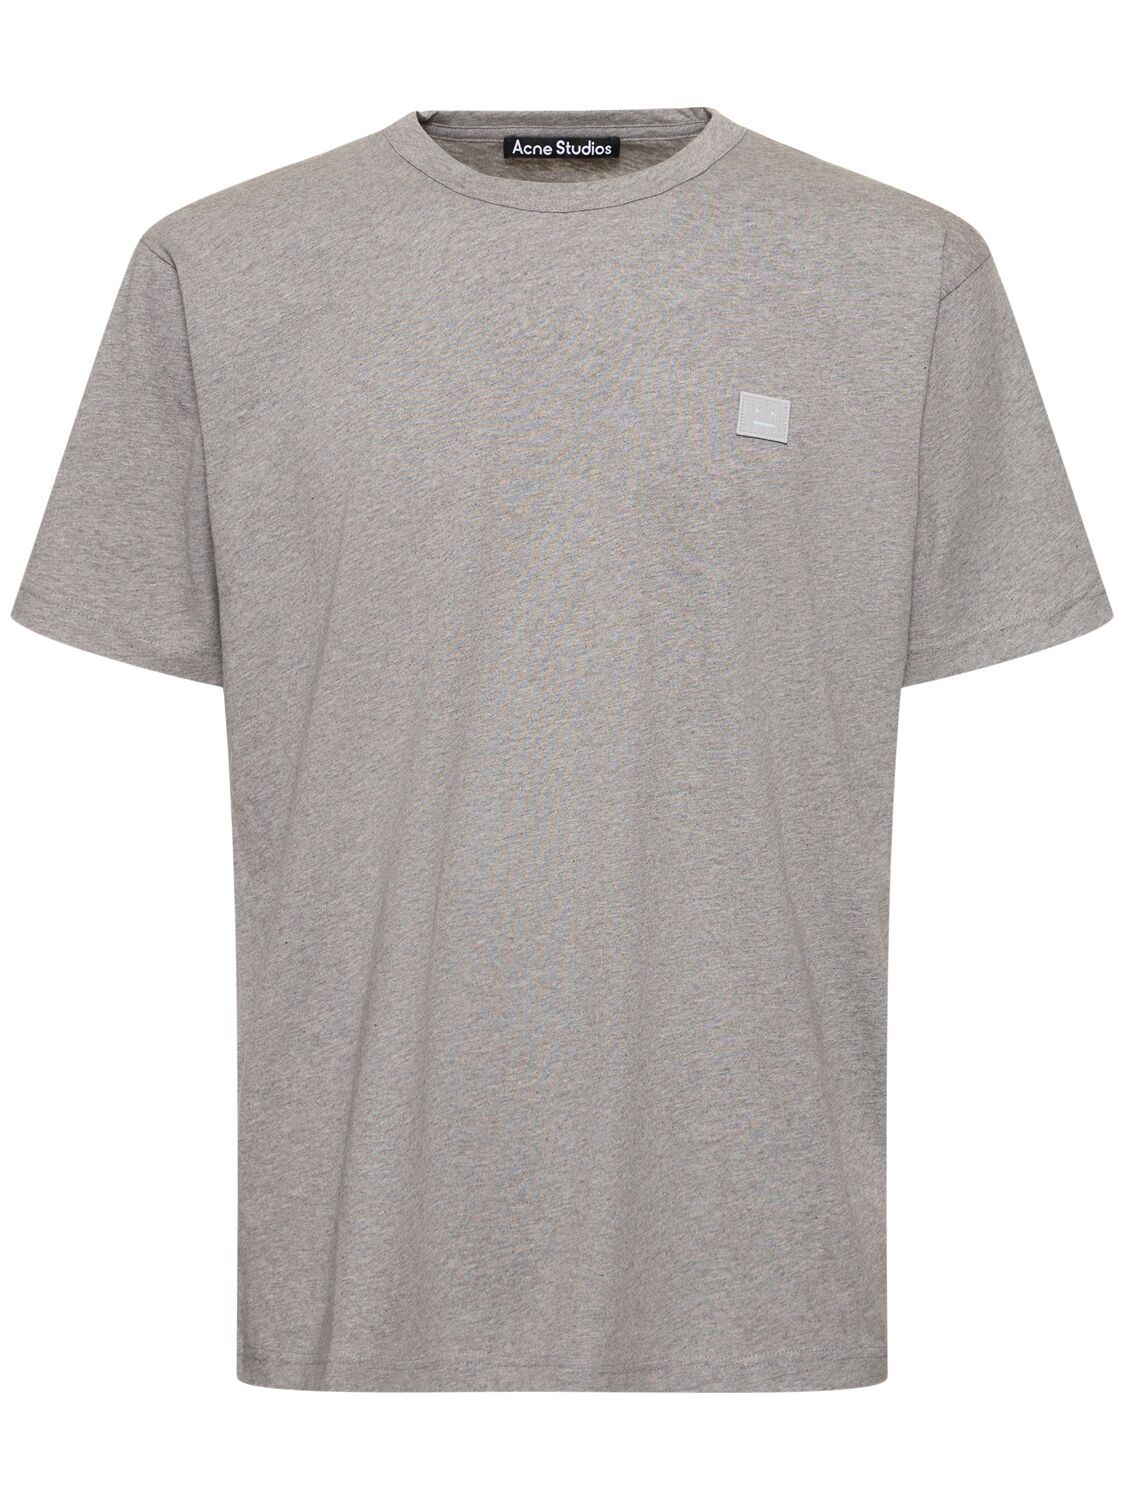 Acne Studios Face Cotton T-shirt In Light Grey